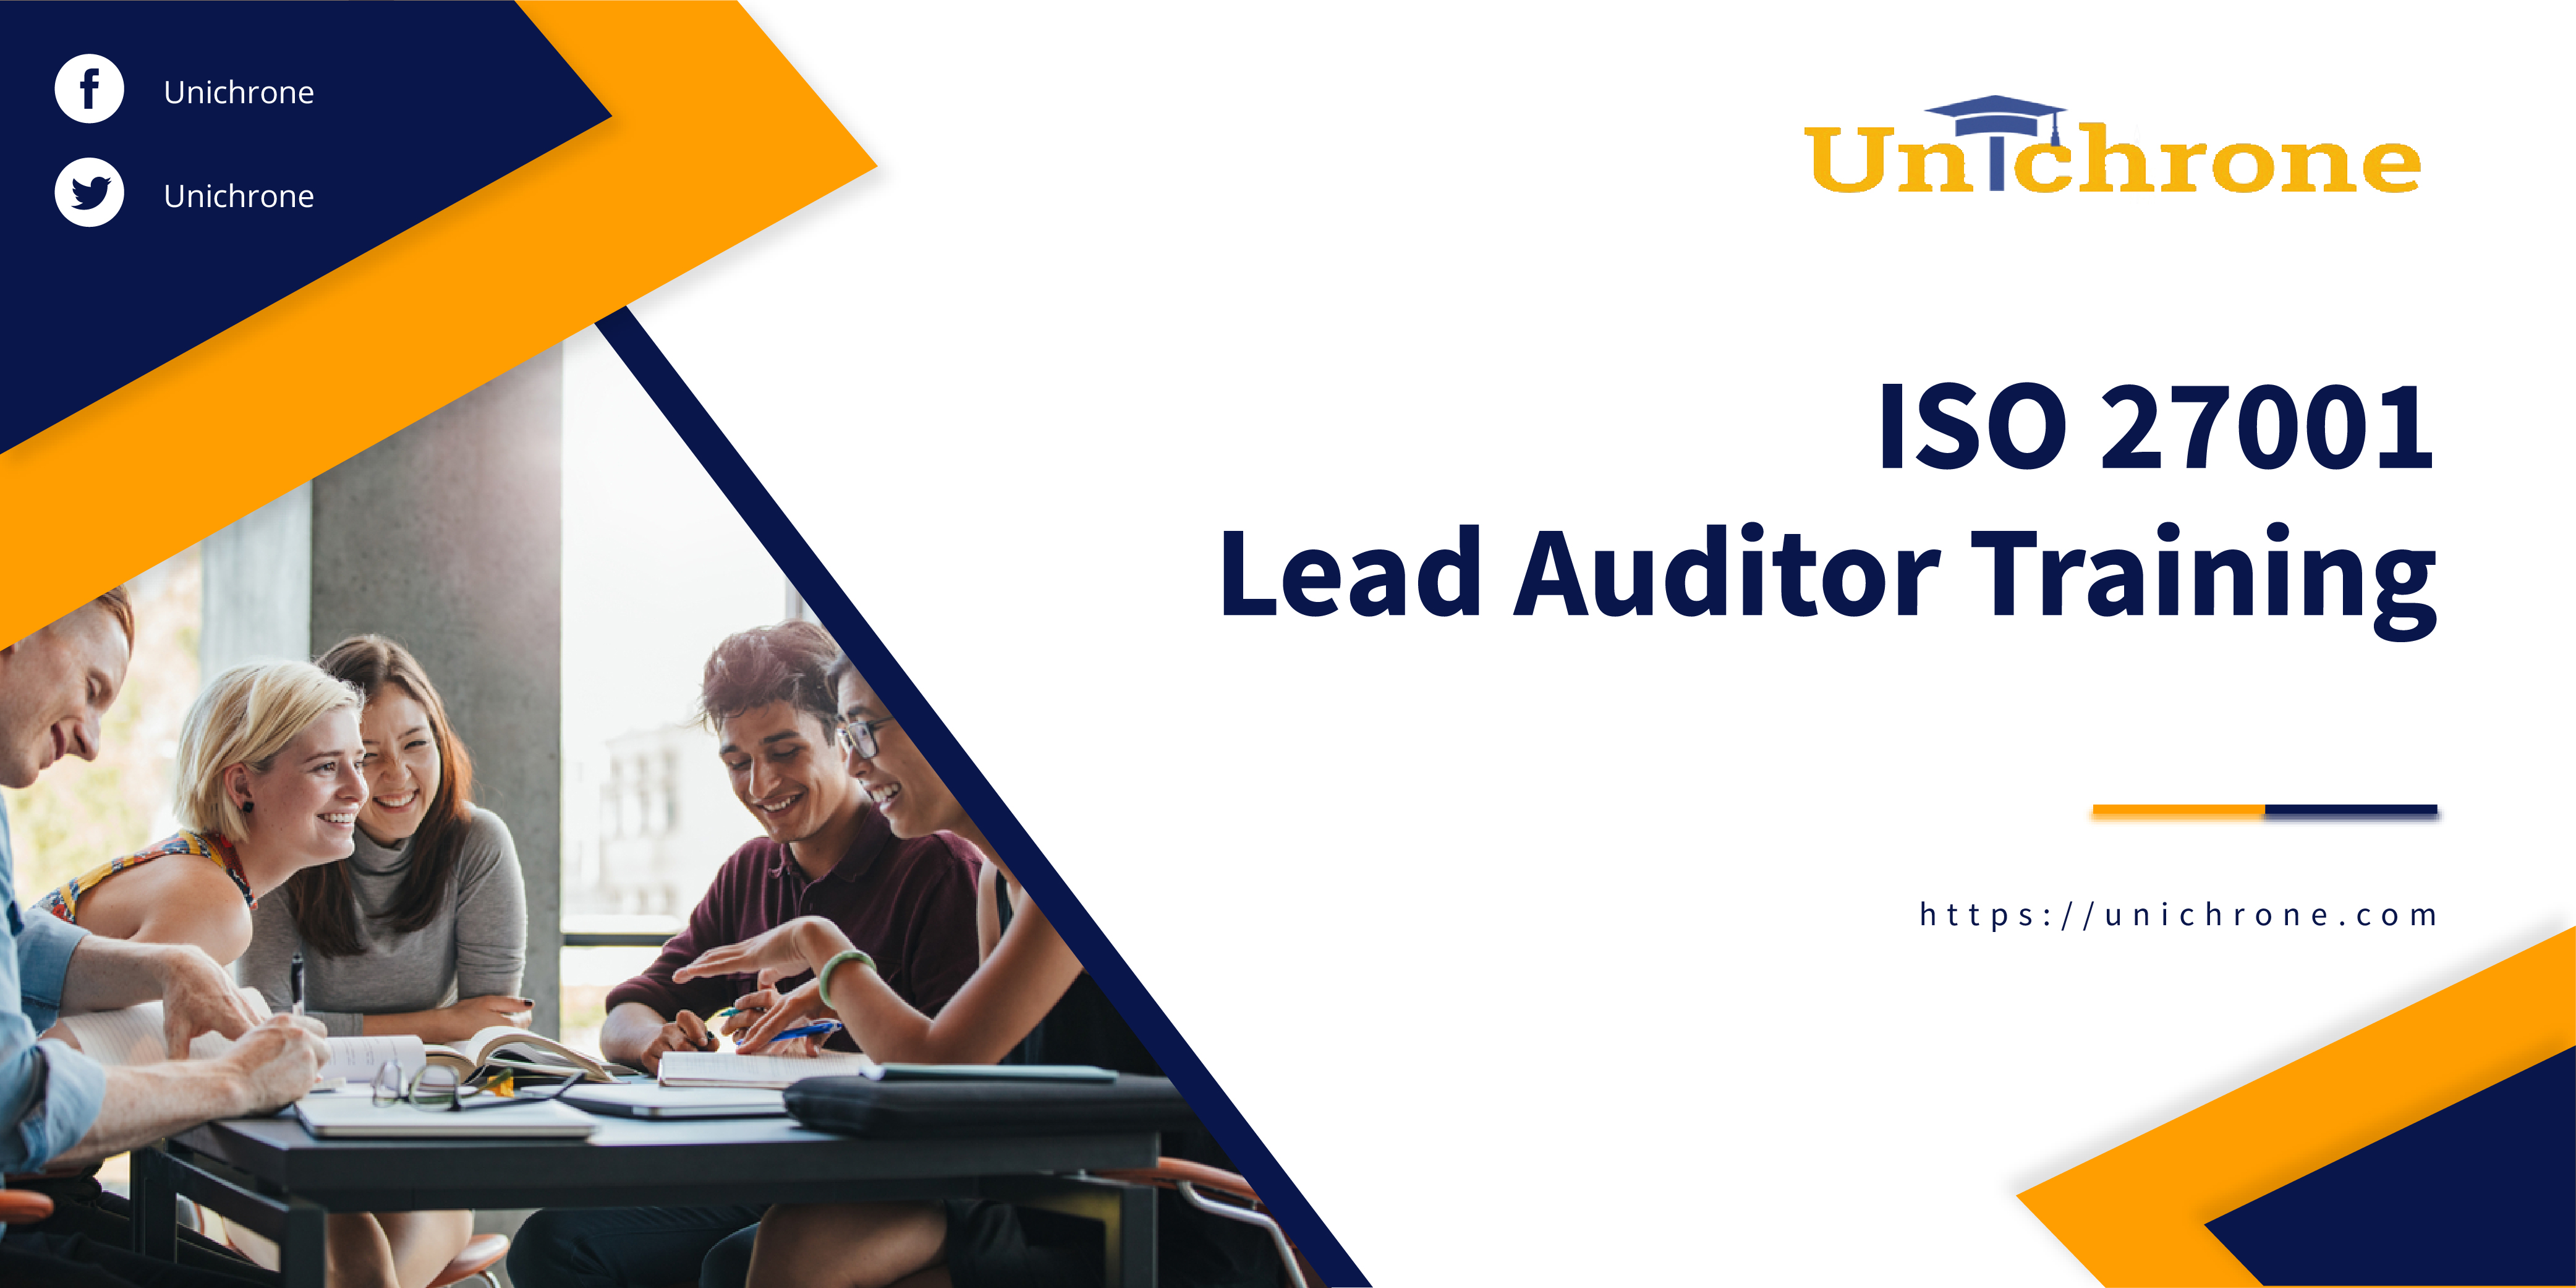 ISO 27001 Lead Auditor Training in Davao City Philippines, Bangalore, Davao Region, Philippines